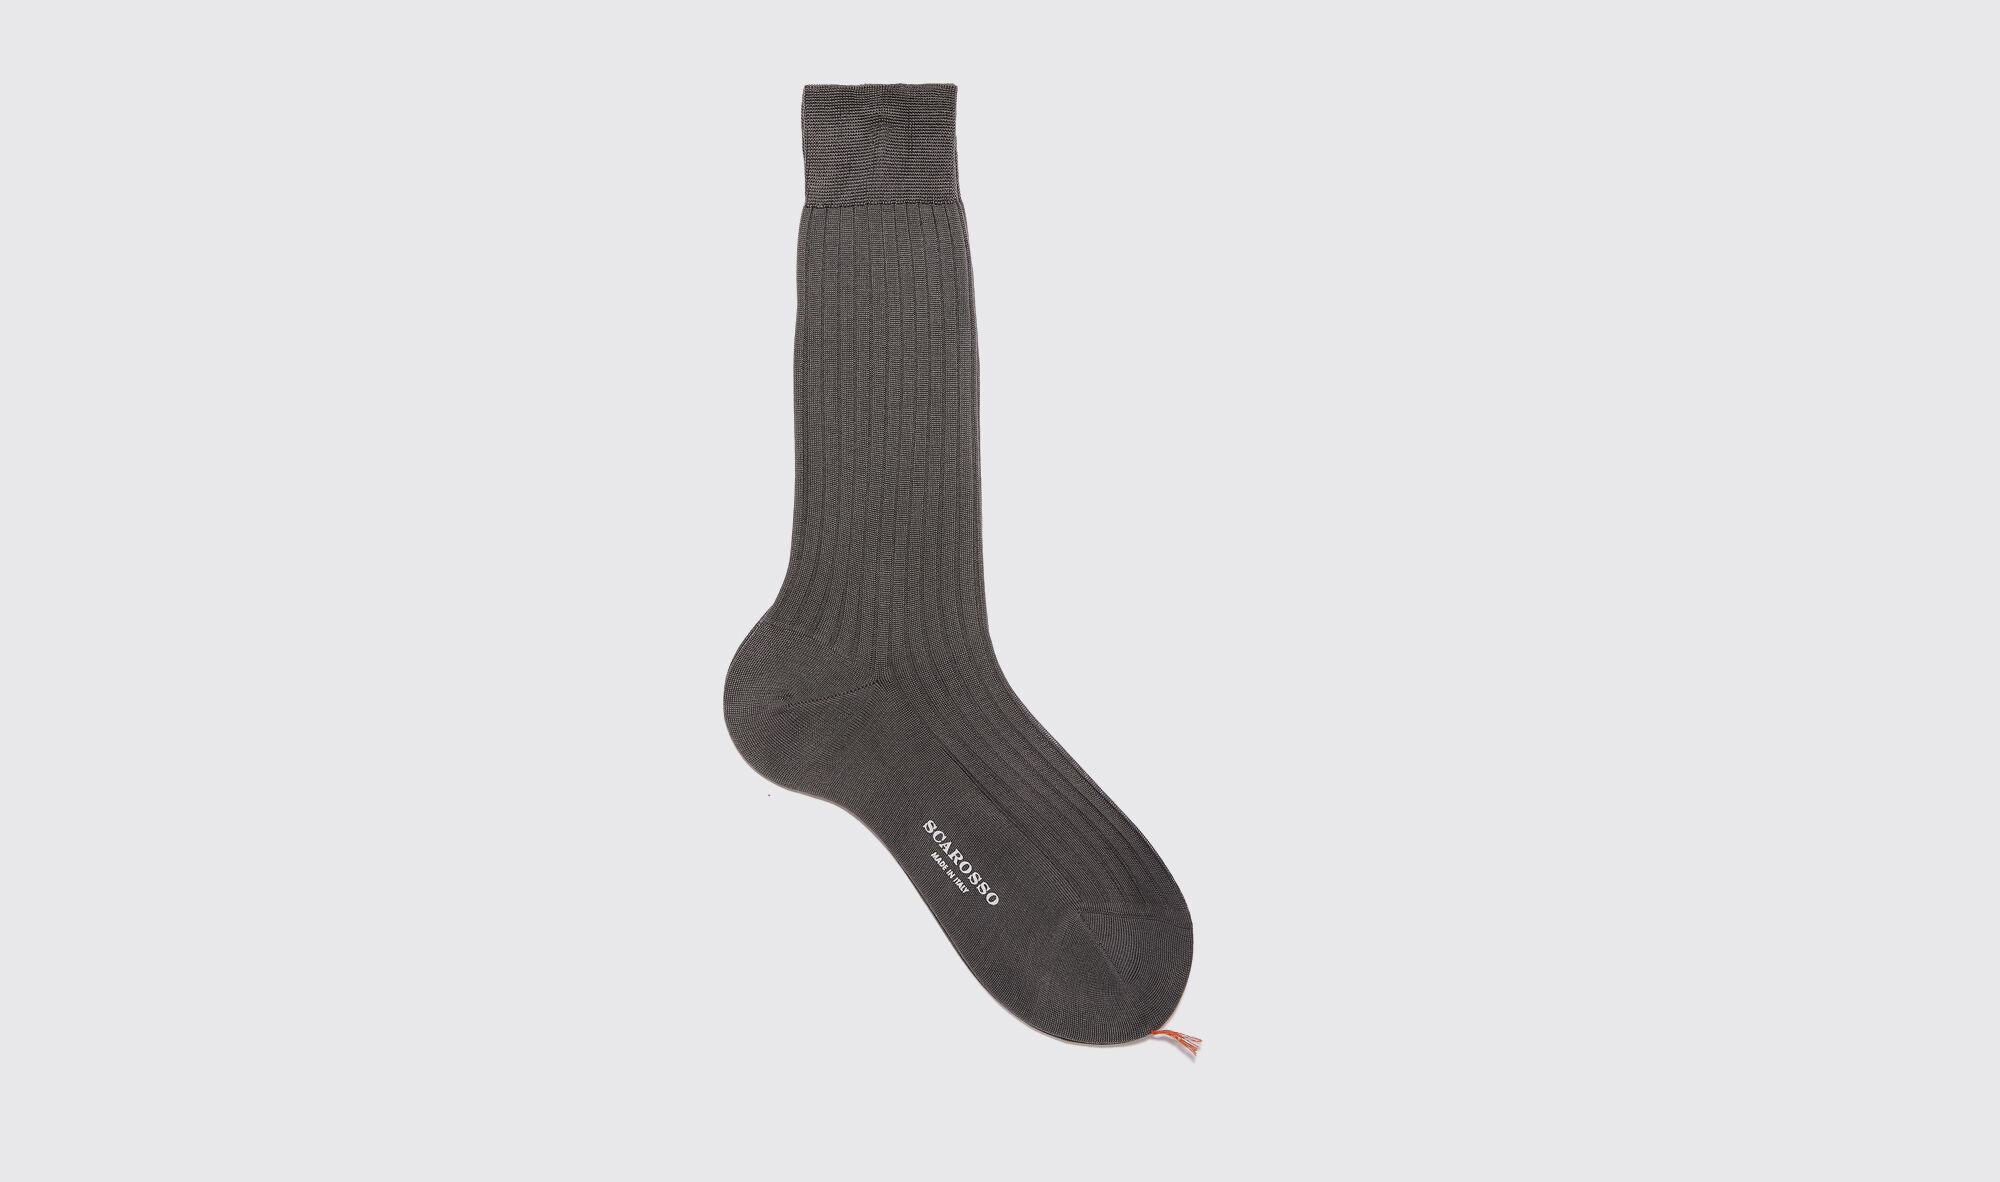 Scarosso Grey Cotton Calf Socks - Uomo Calze Grigio - Cotone 40-41